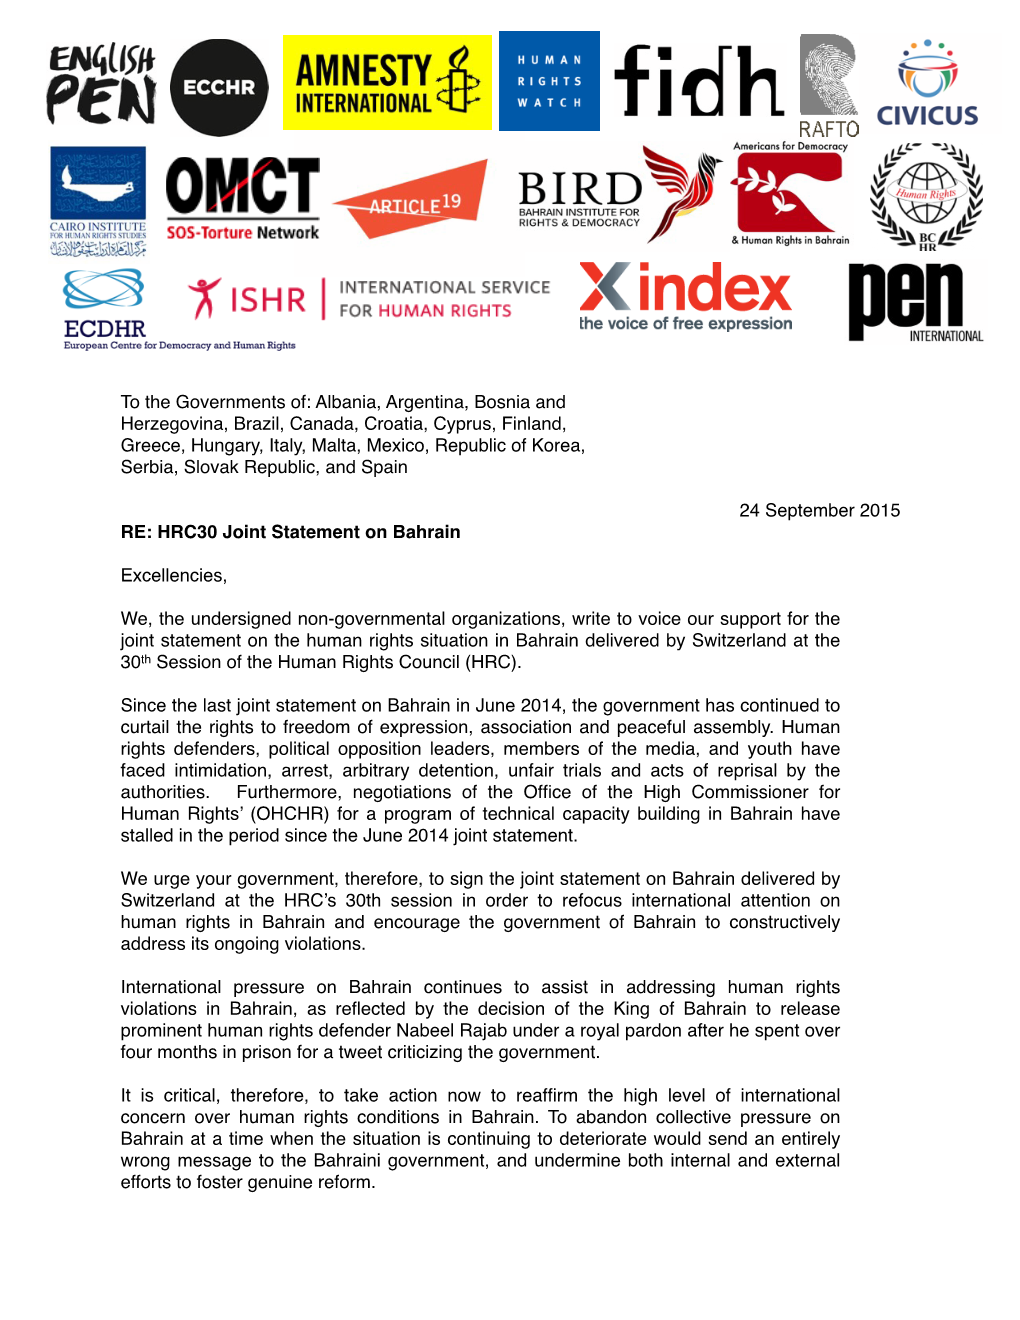 Ngos Letter on Swiss Joint Statement on Bahrain 24Sept15 Final